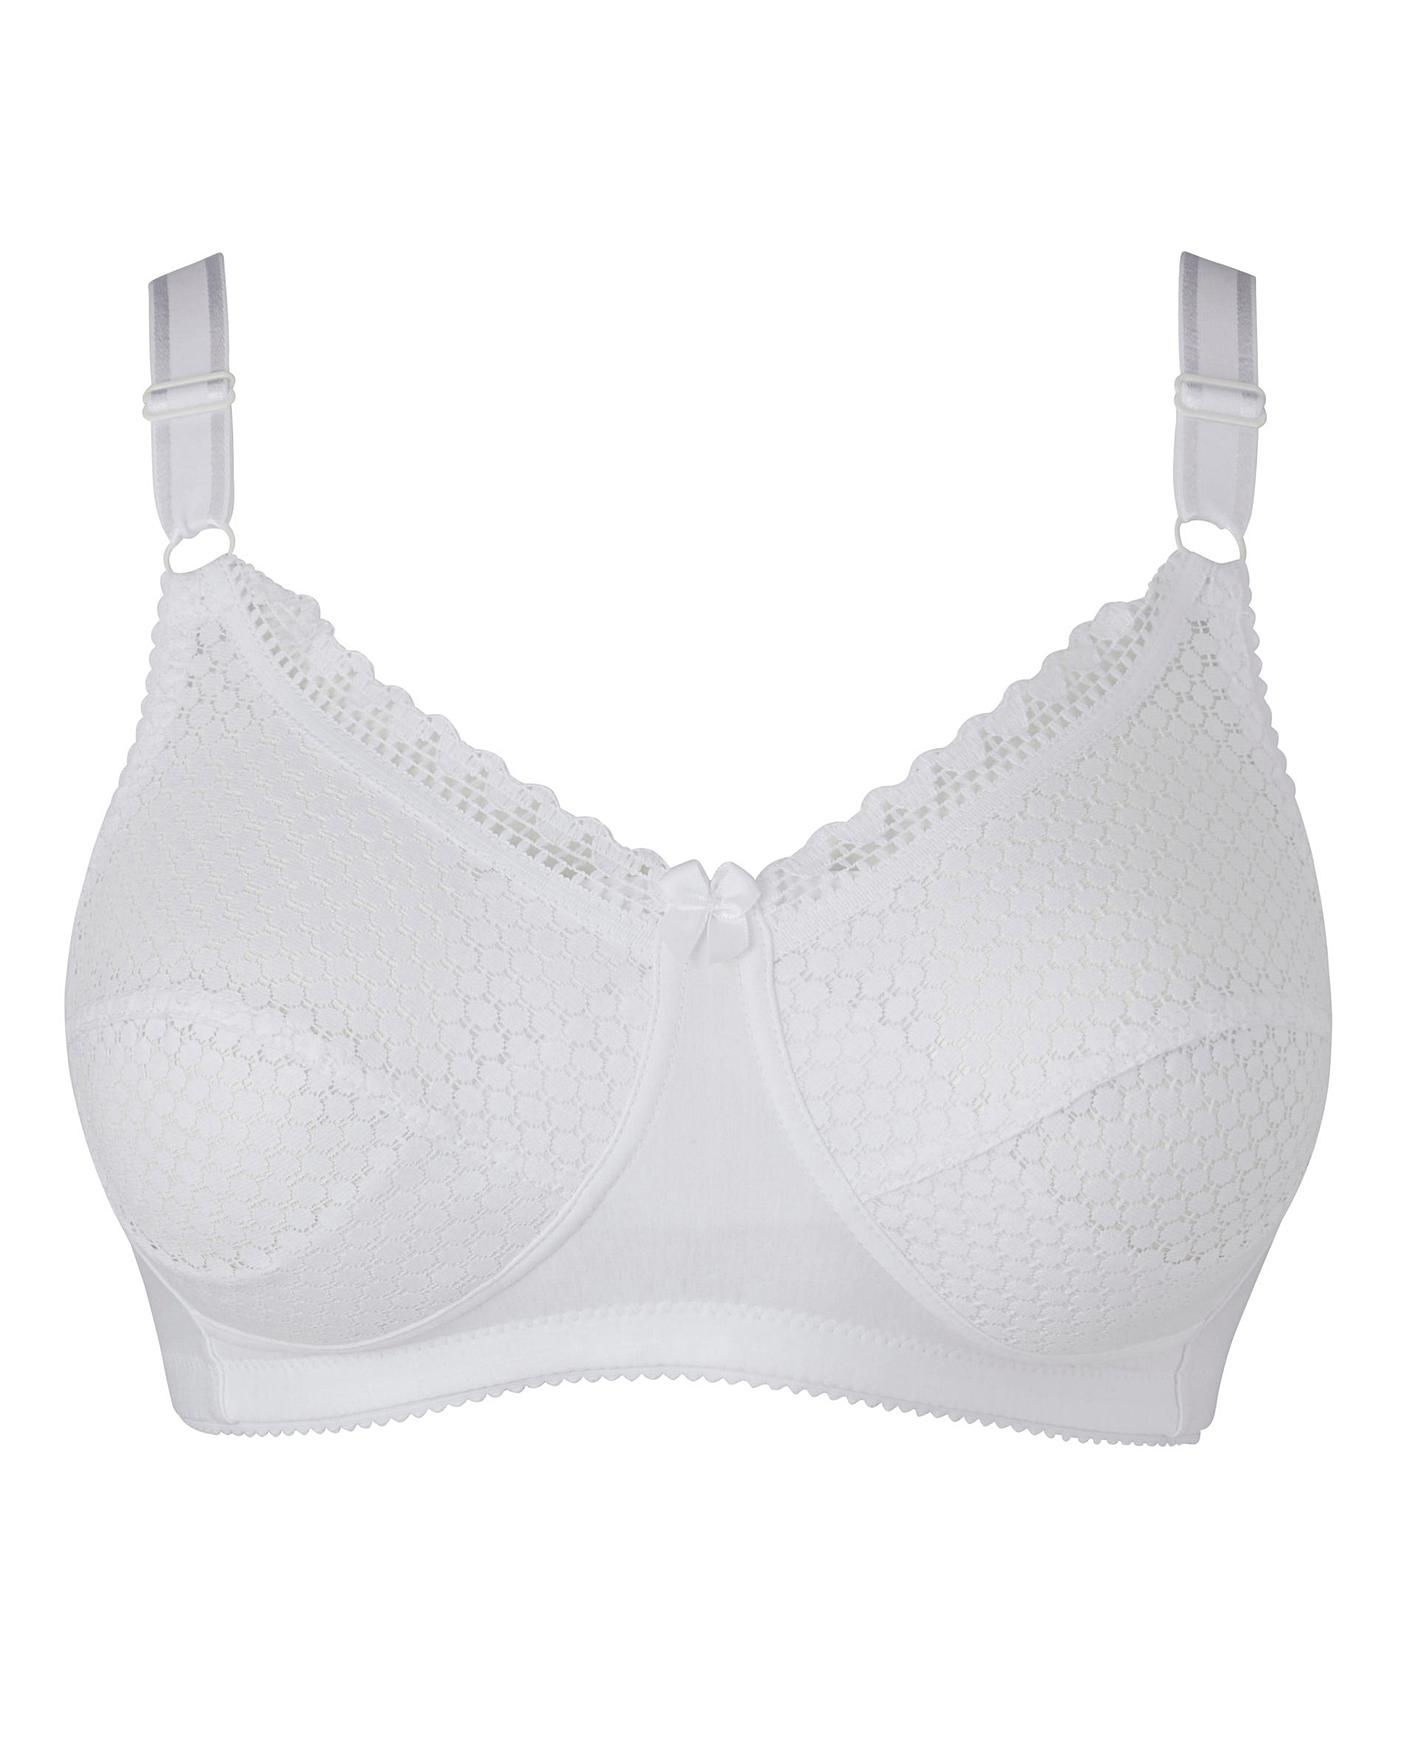 Cotton Dots – non-wired cotton bra that provides excellent lift